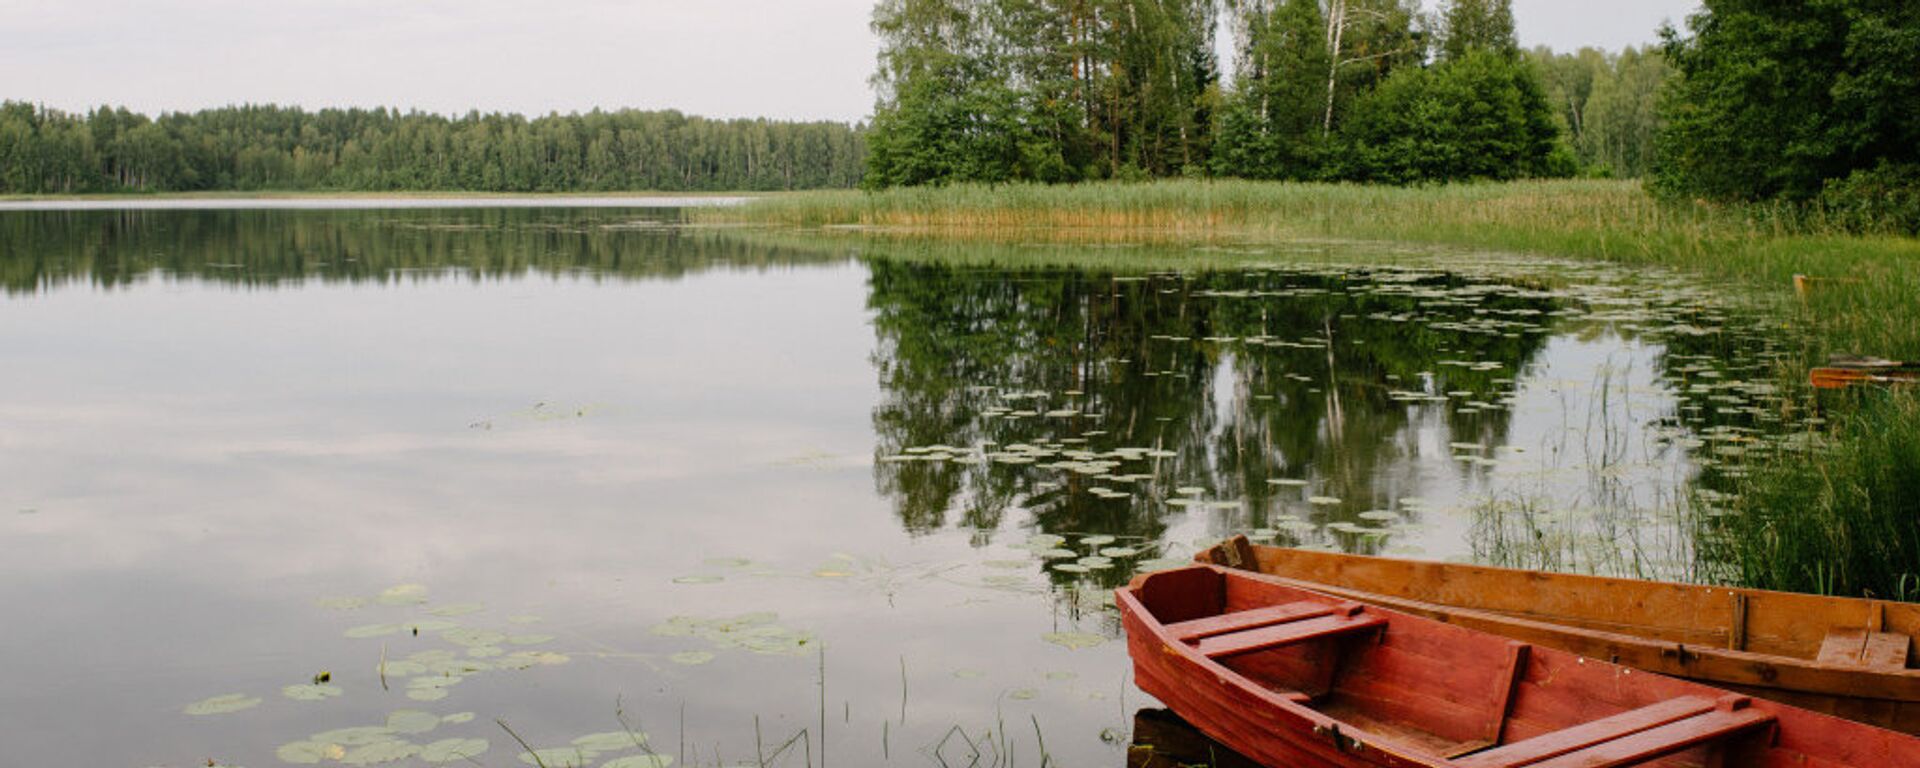 Лодки на лесном озере в Латгалии - Sputnik Latvija, 1920, 18.04.2017